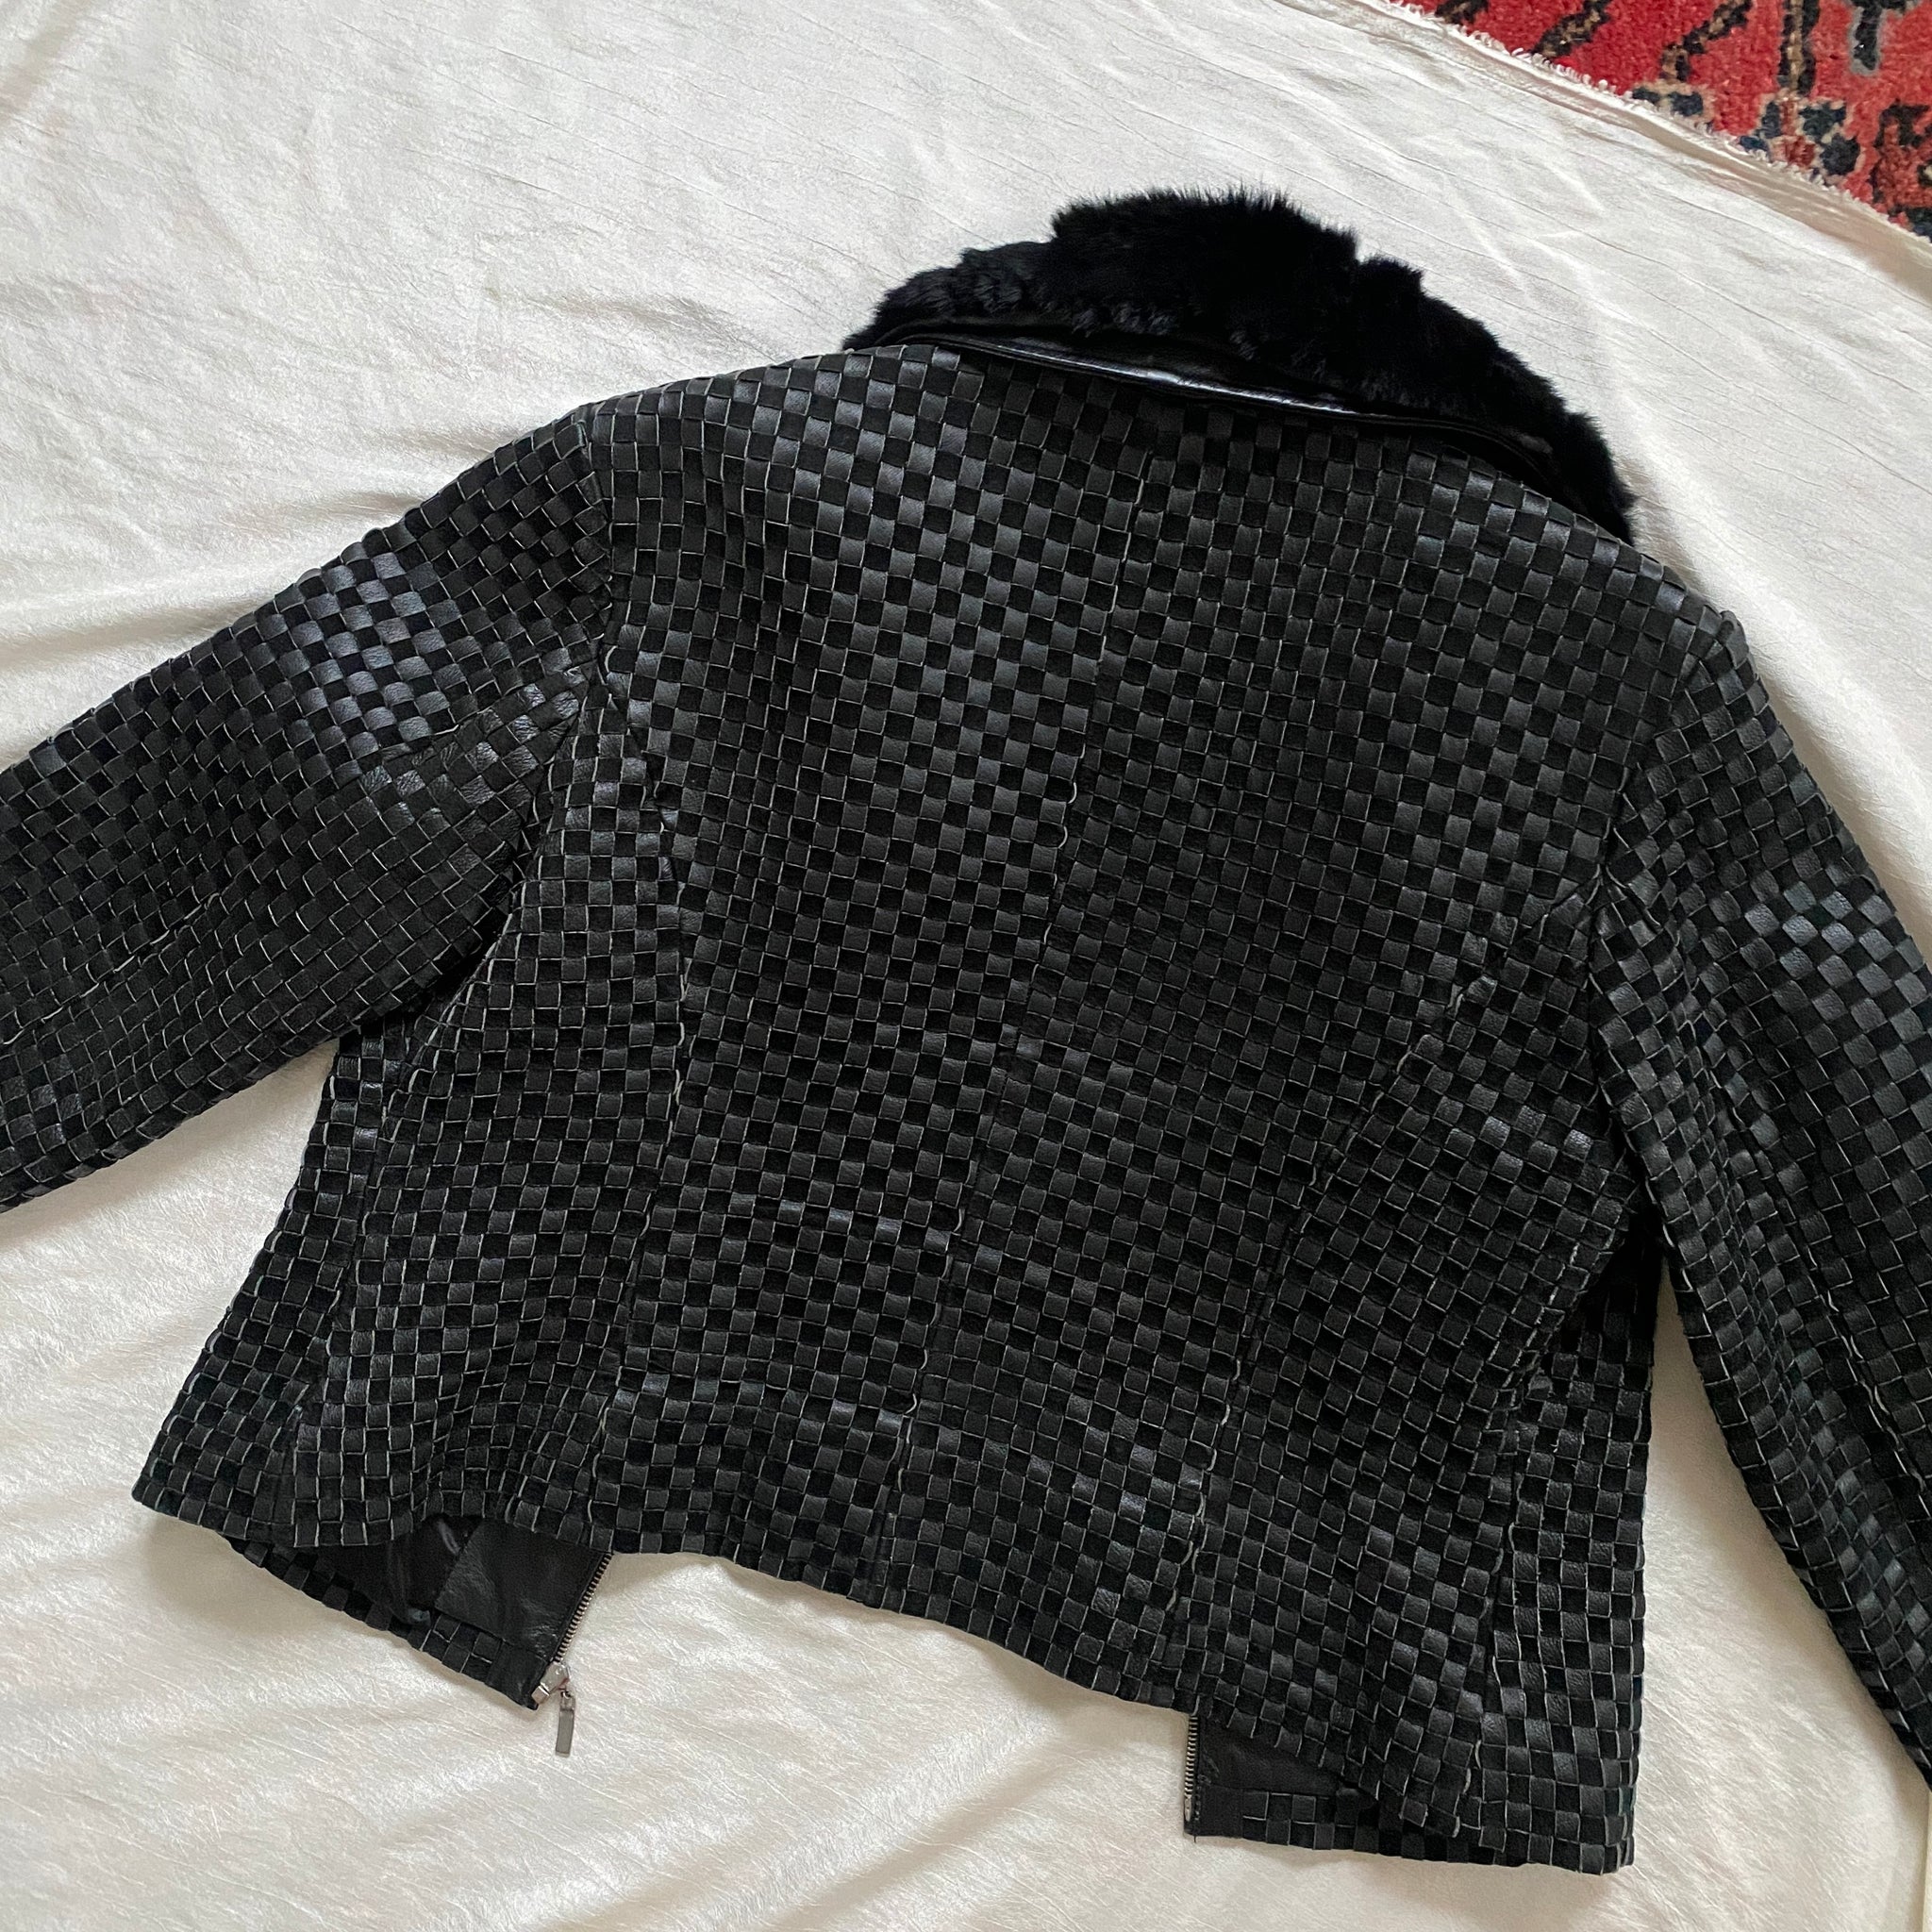 Marvin Richards Woven Leather Jacket